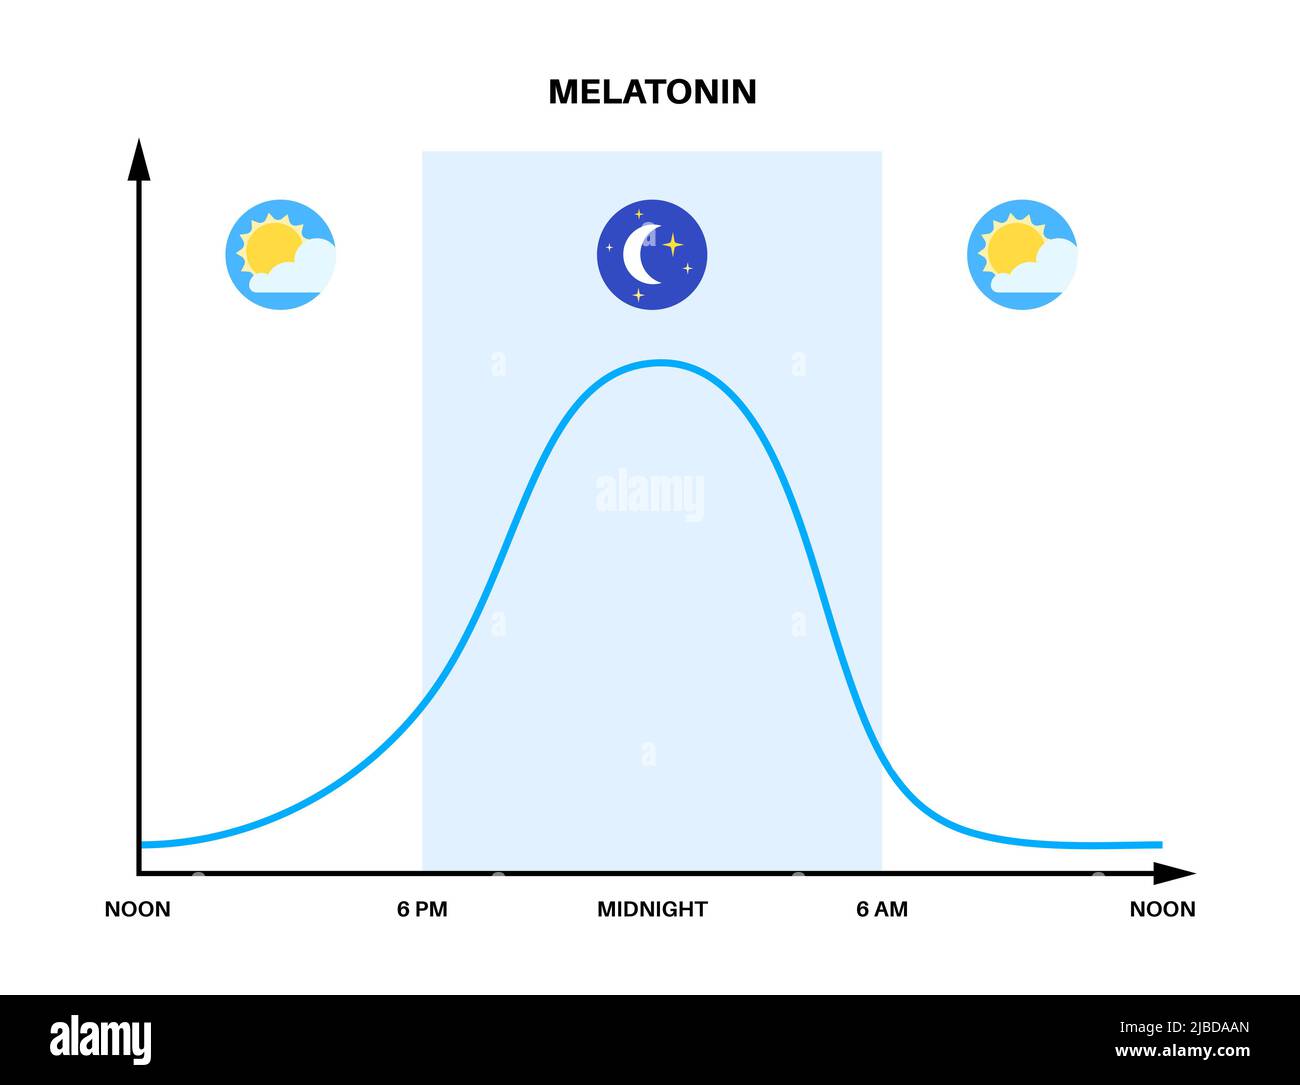 Melatonin and Circadian Rhythms. Мелатонин клипарт. Sleep Wake Cycle. Cycle of Healthcare. Цикл пробуждение